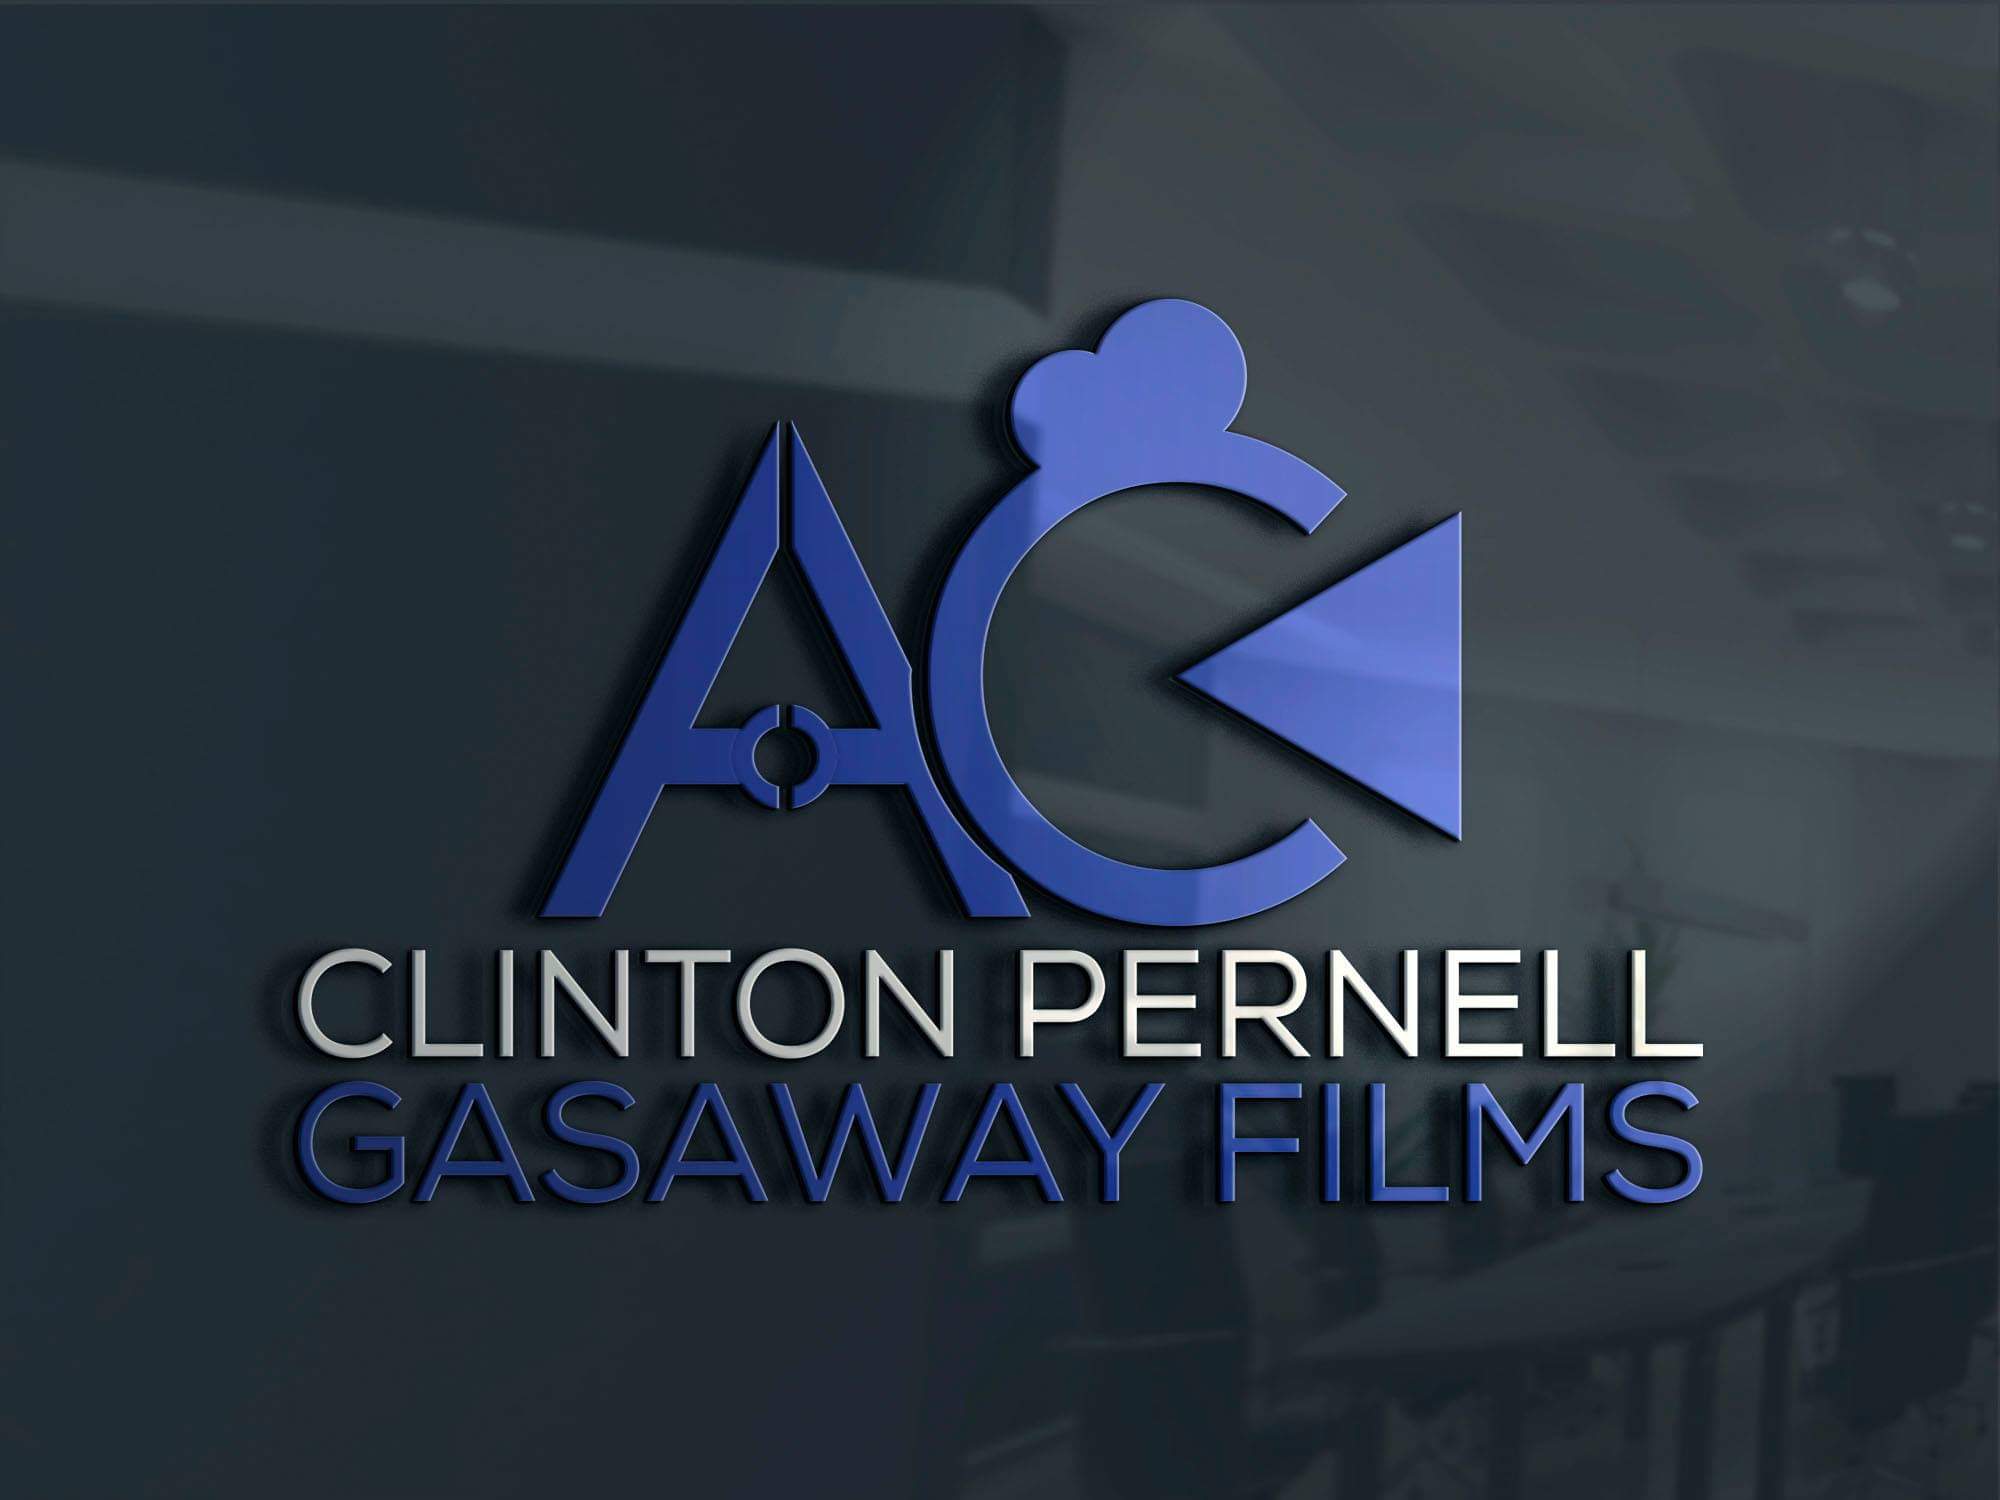 Clinton Pernell Gasaway Films